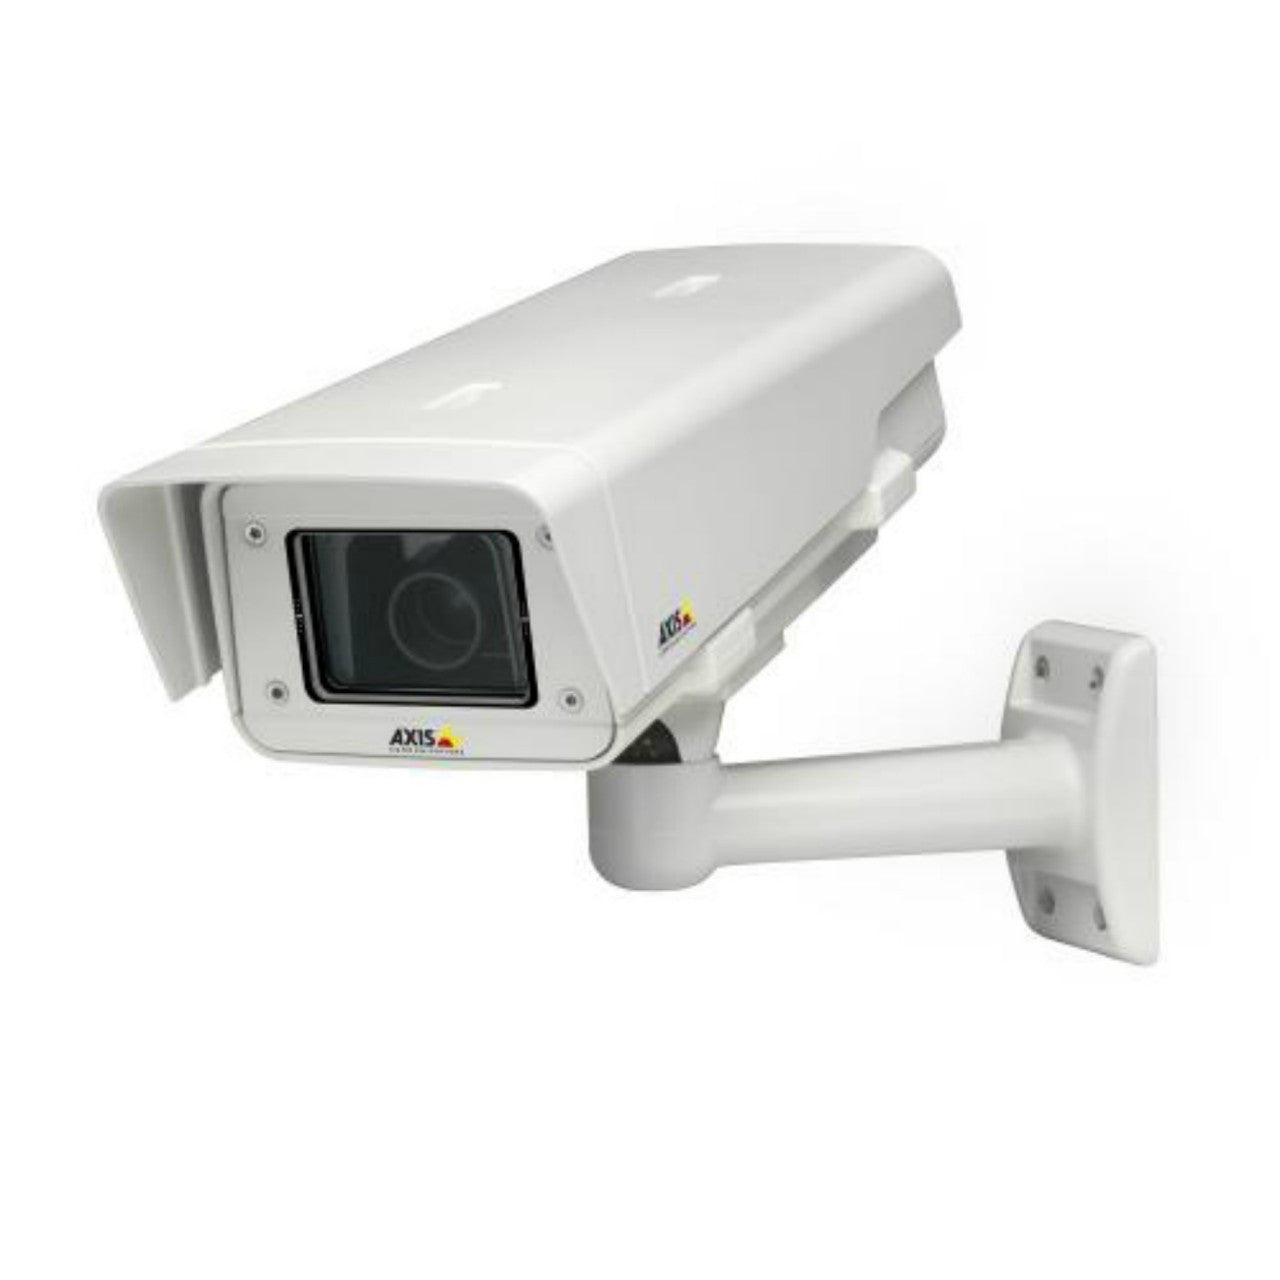 AXIS P1347-E (0368-001) Outdoor Vandal Network IP Camera